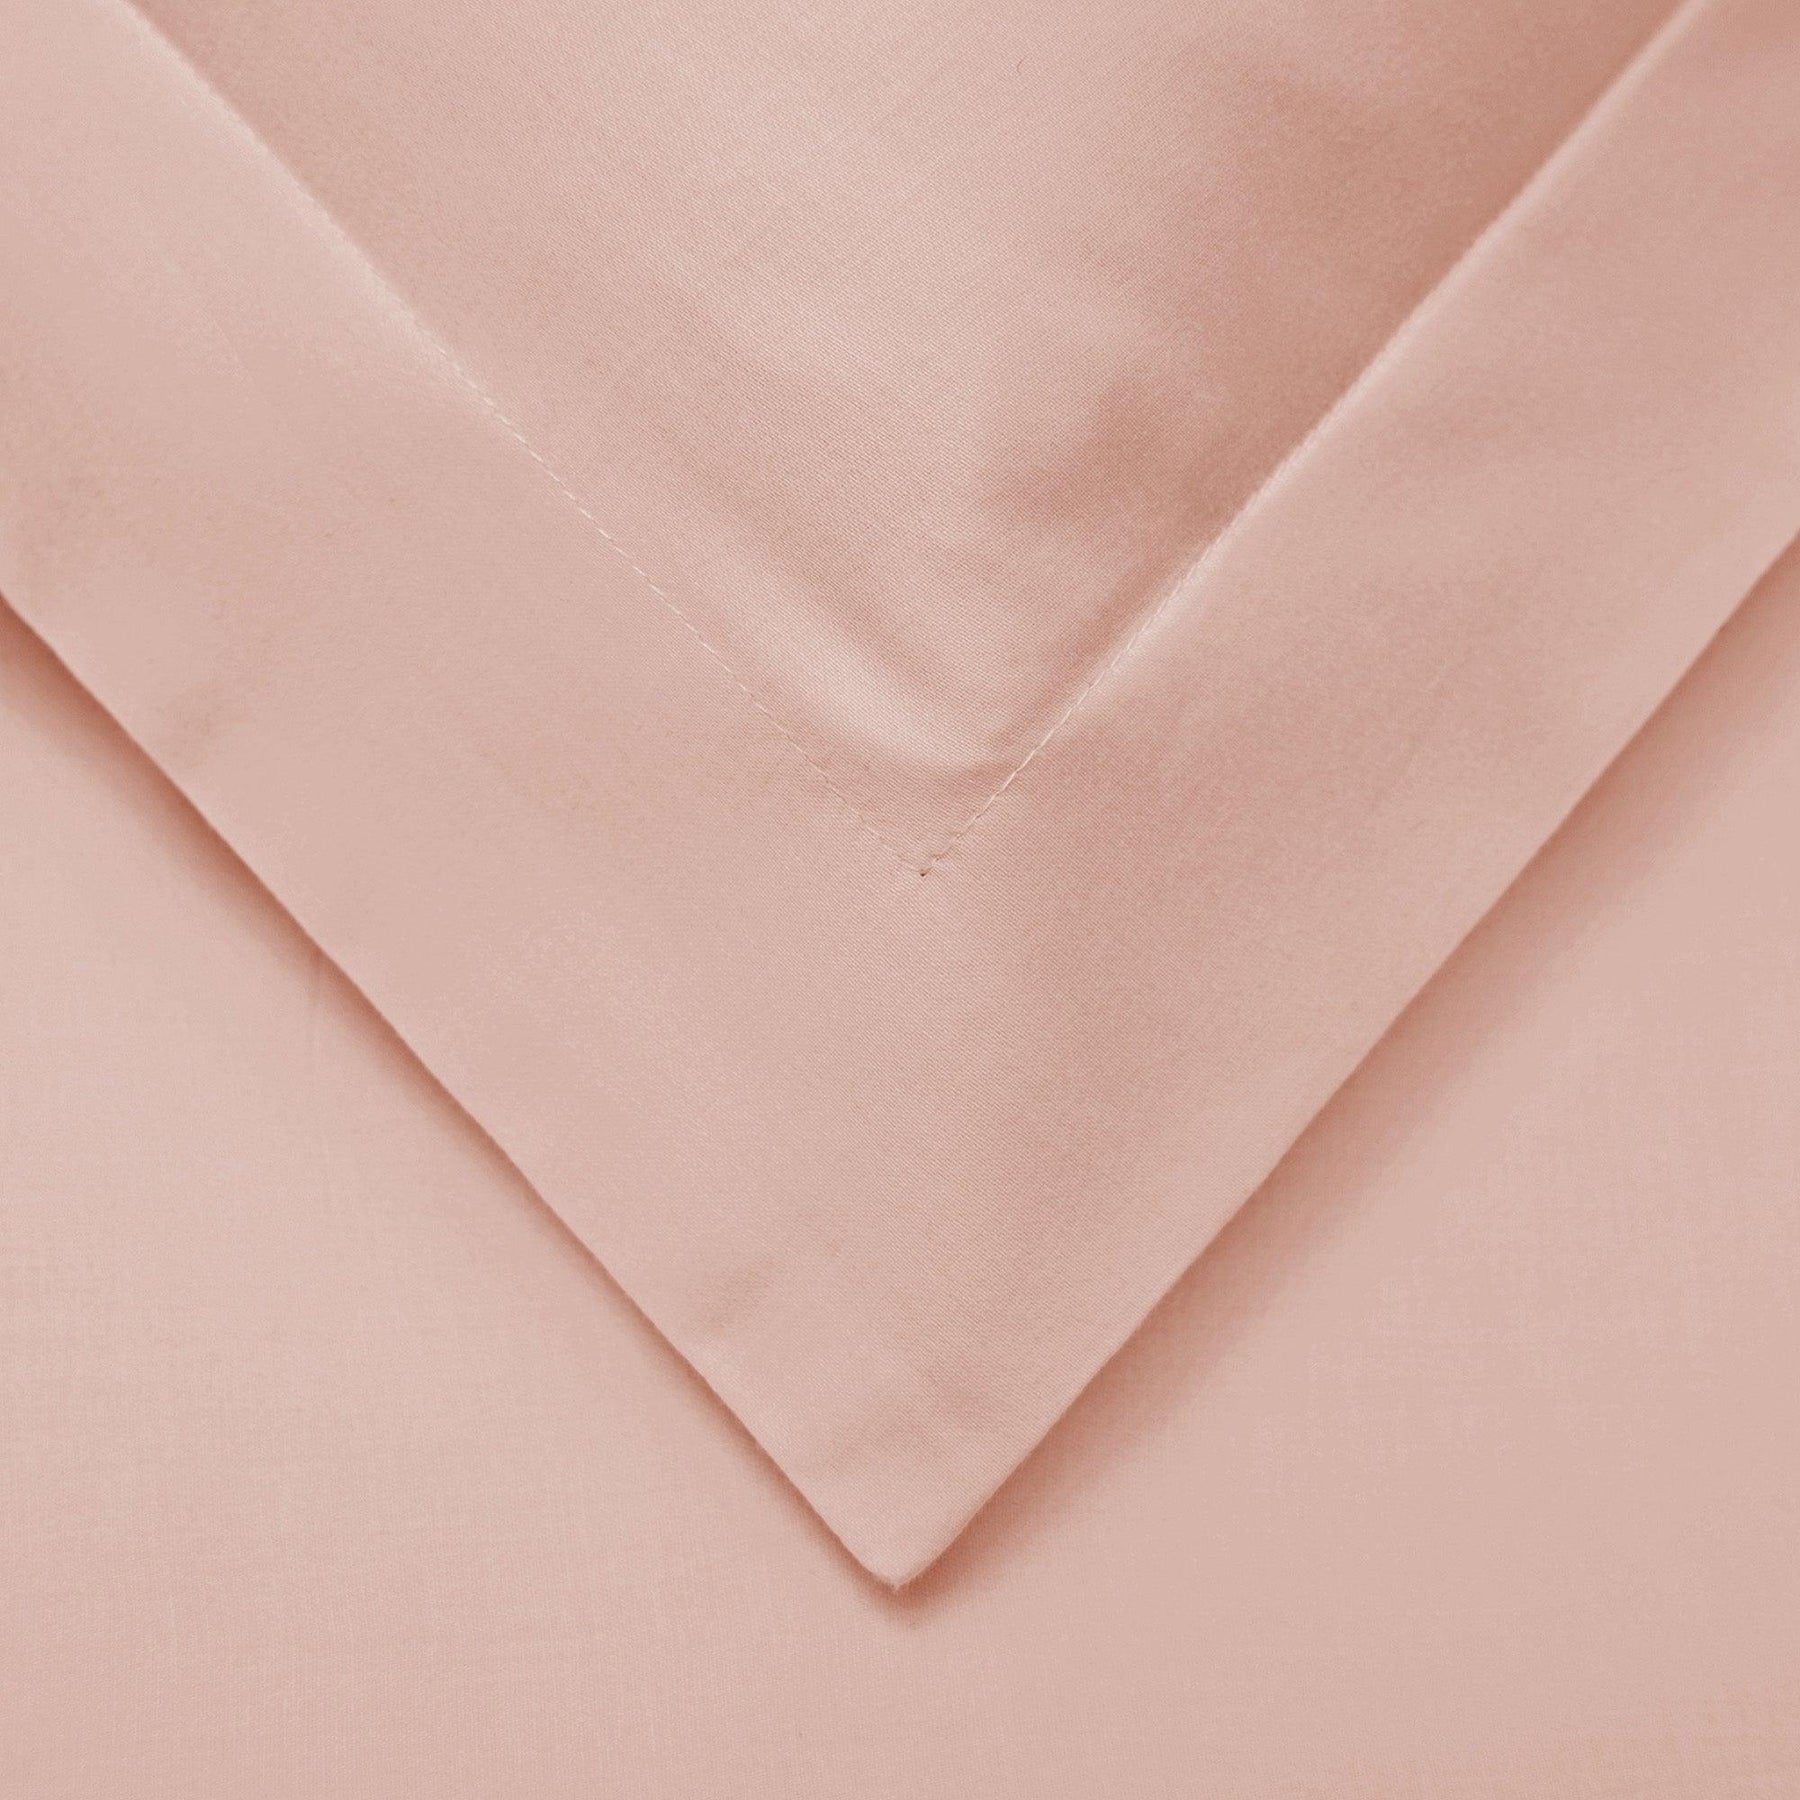 Superior Cotton Blend Solid 3 Piece Heavyweight Duvet Cover Set - Blush